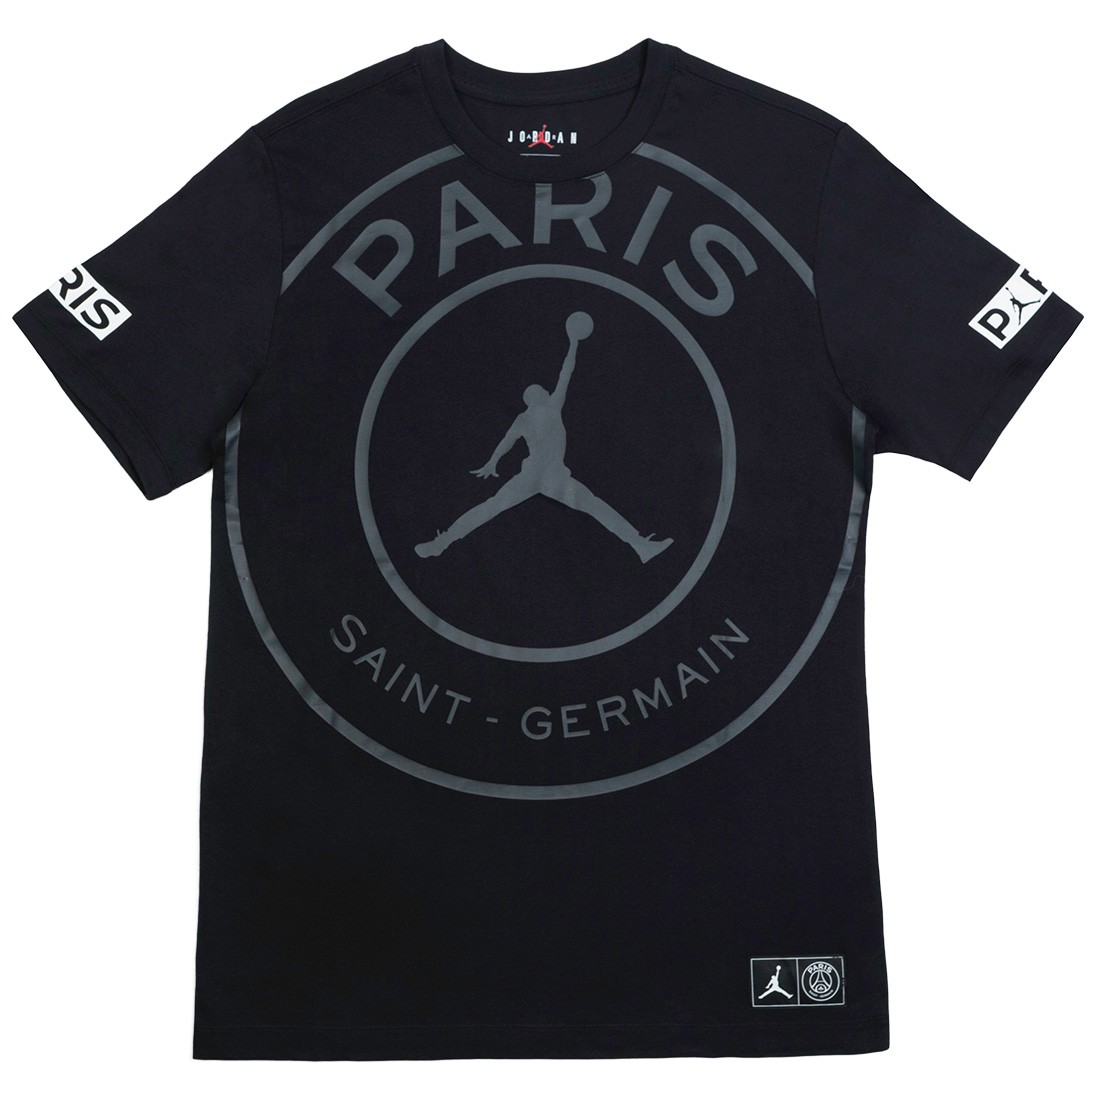 x paris saint germain logo tee black